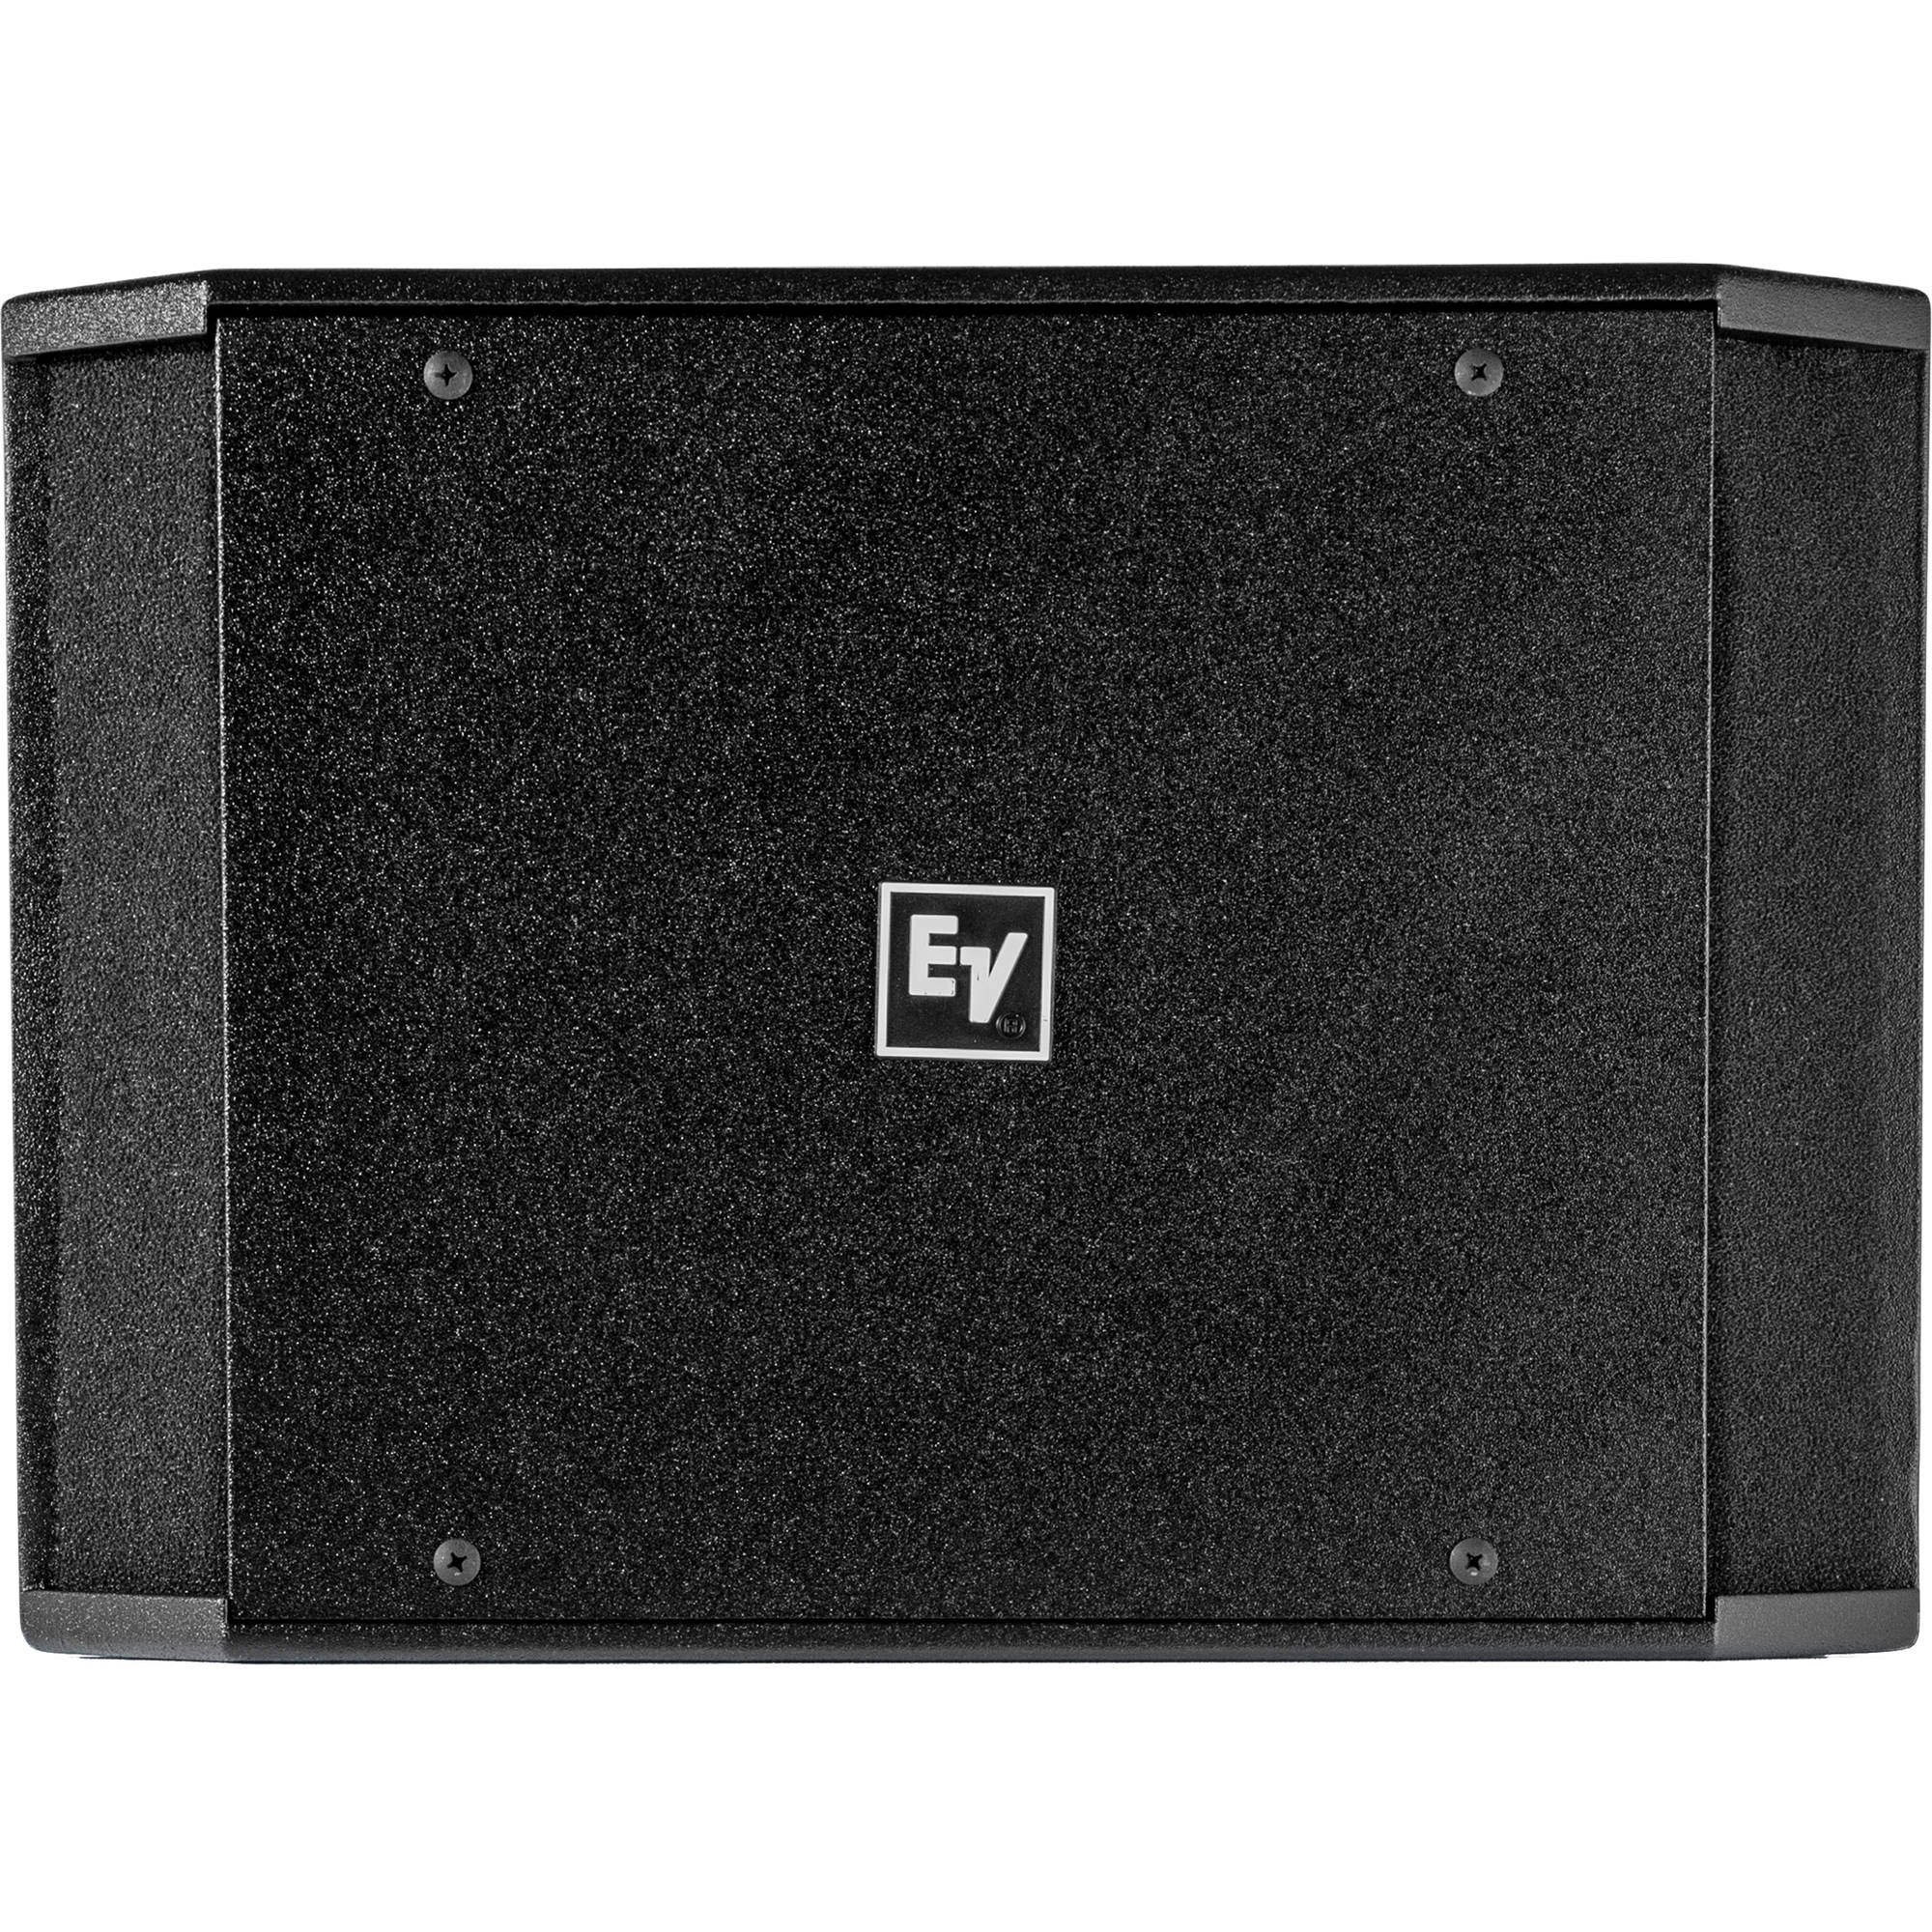 Loa siêu trầm Electro Voice EVID-S12.1B